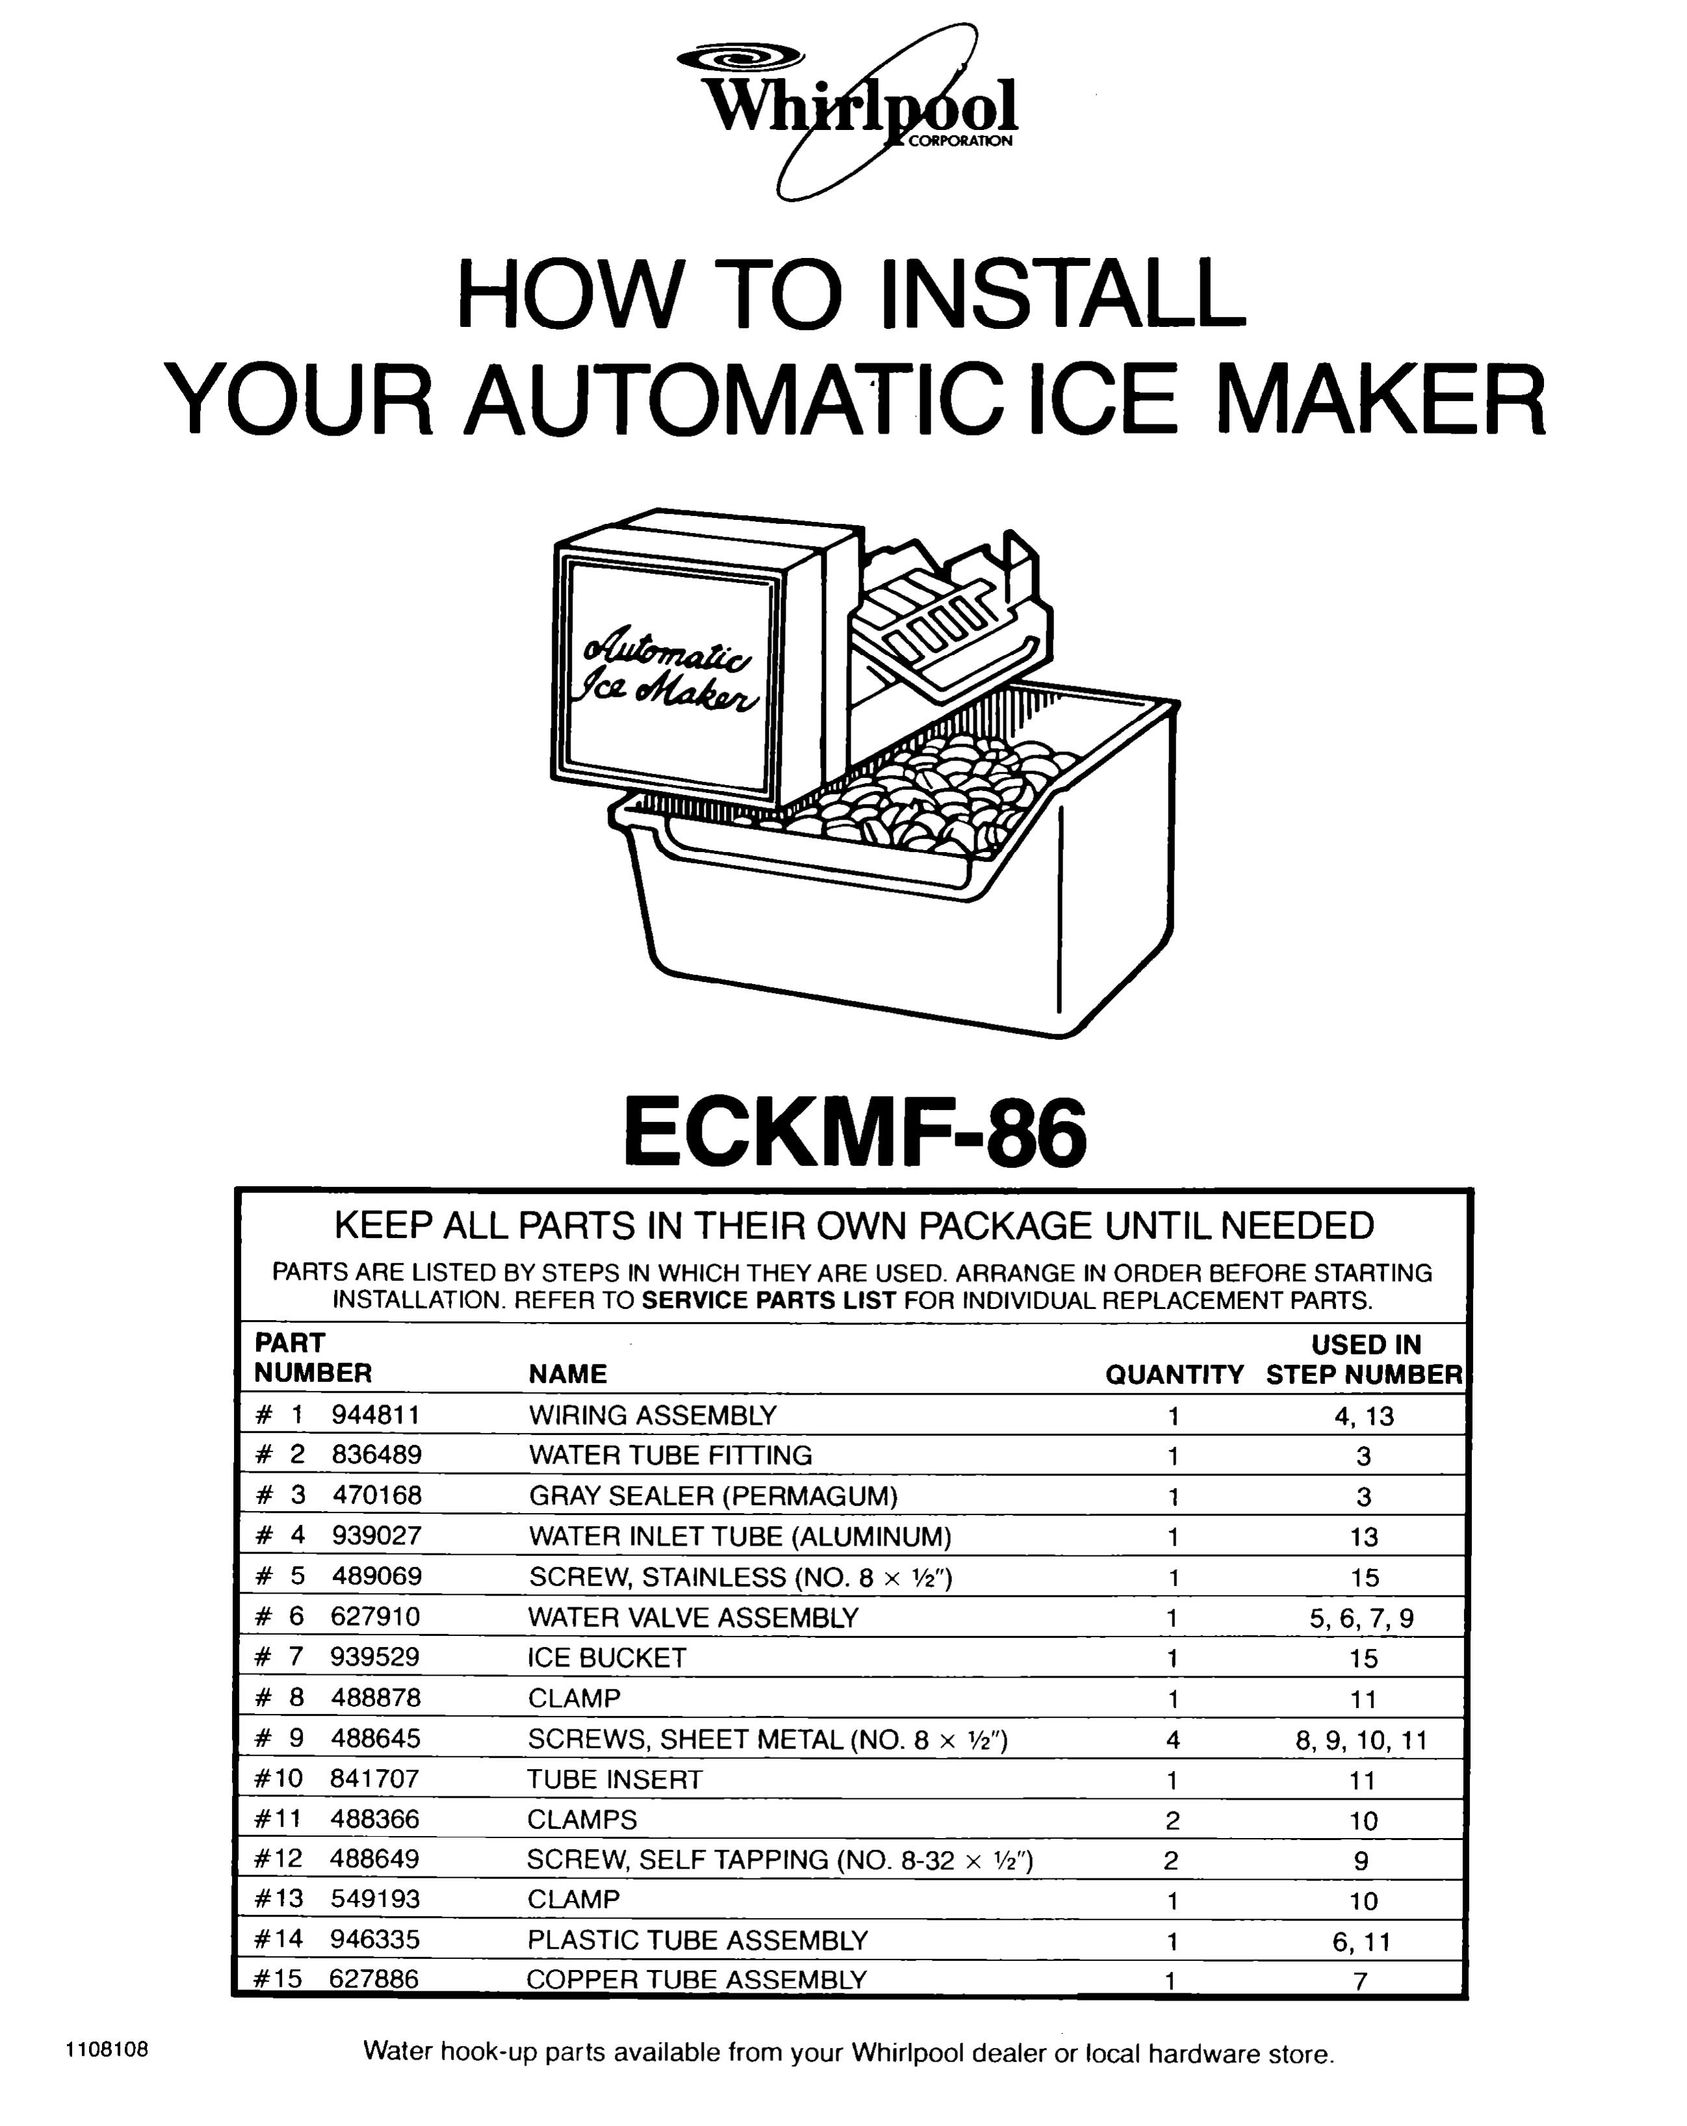 Whirlpool ECKMF-86 Ice Maker User Manual